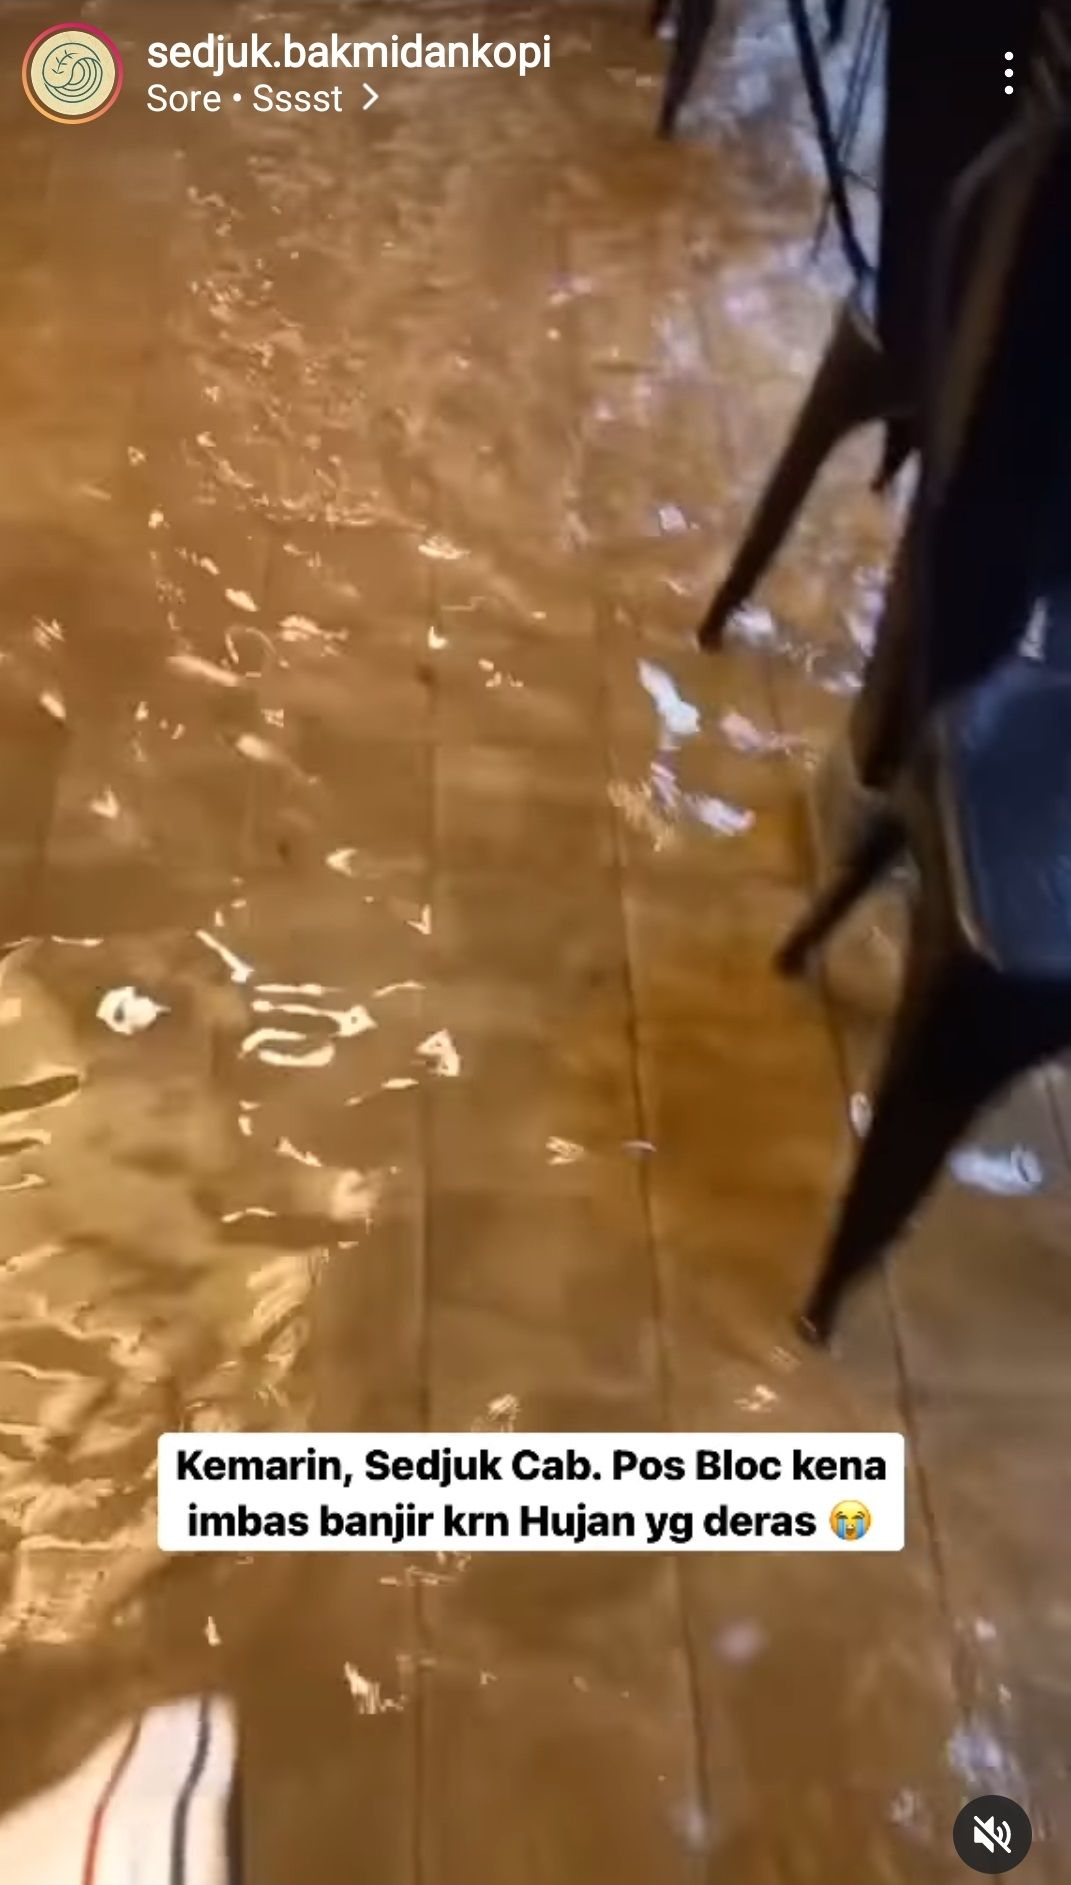 Hujan Deras, Resto Sedjuk di Pos Bloc Kebanjiran